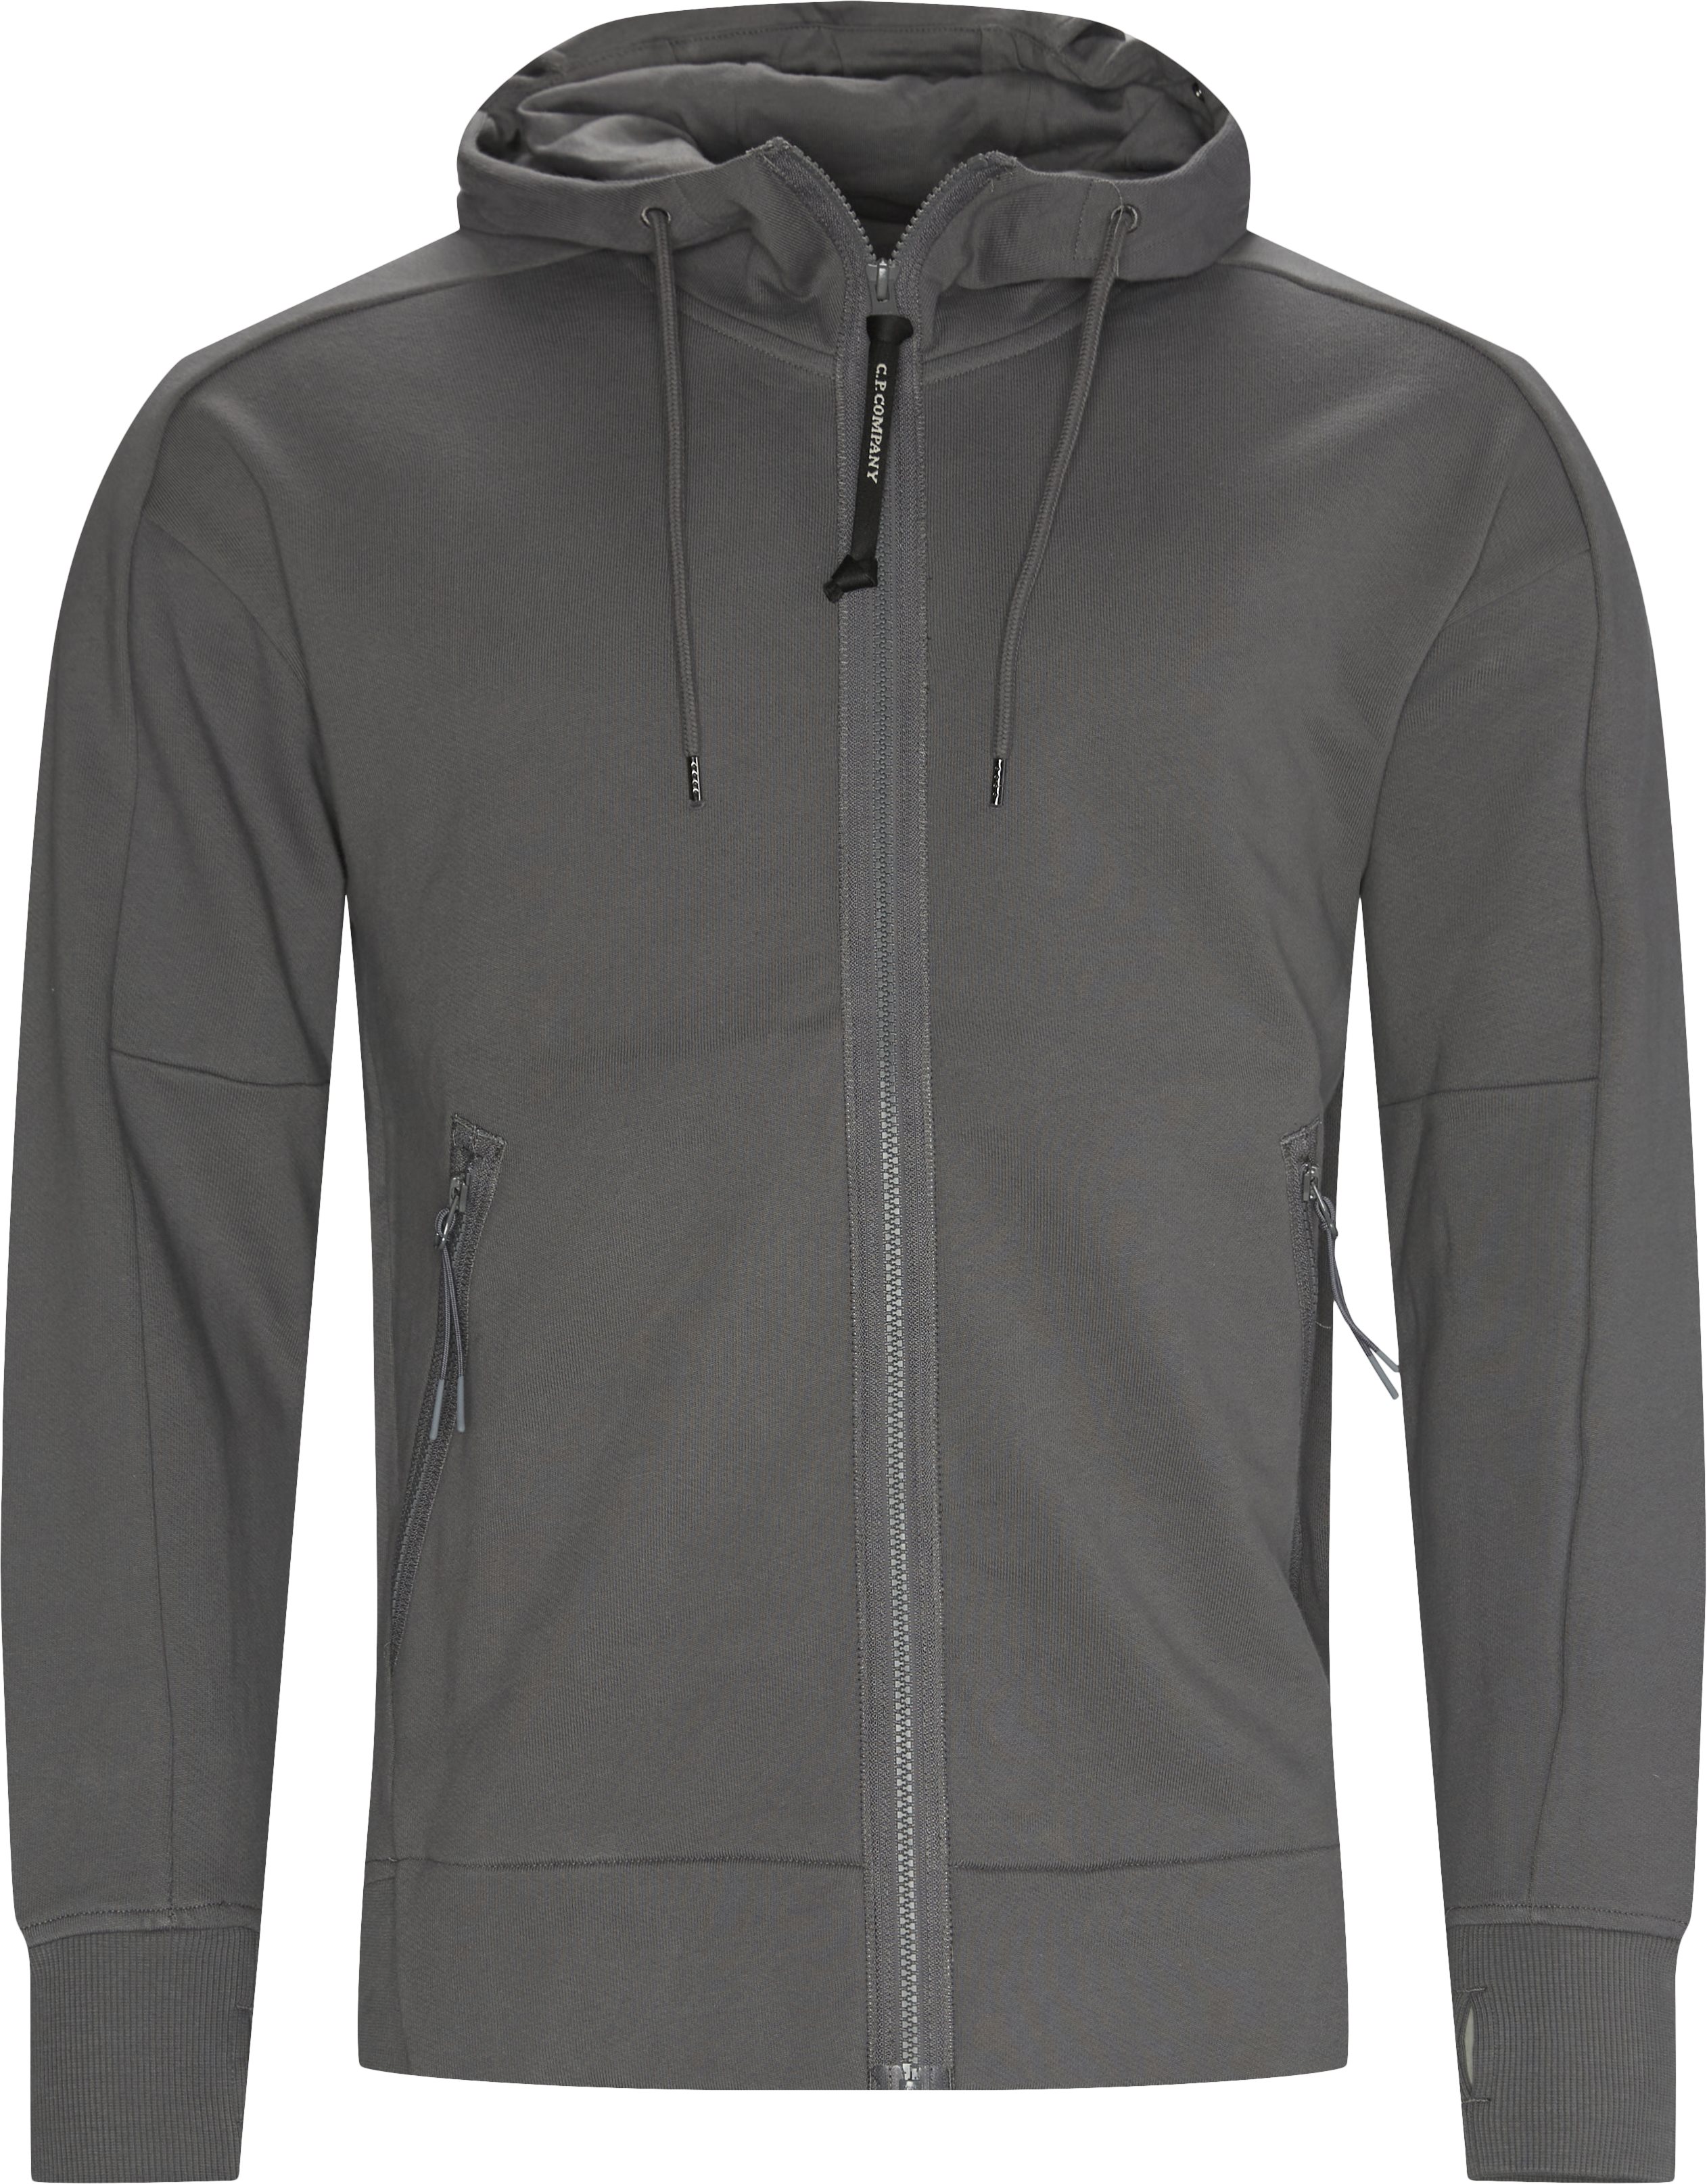 Diogonal Raised Hooded Sweatshirt - Sweatshirts - Regular fit - Grå